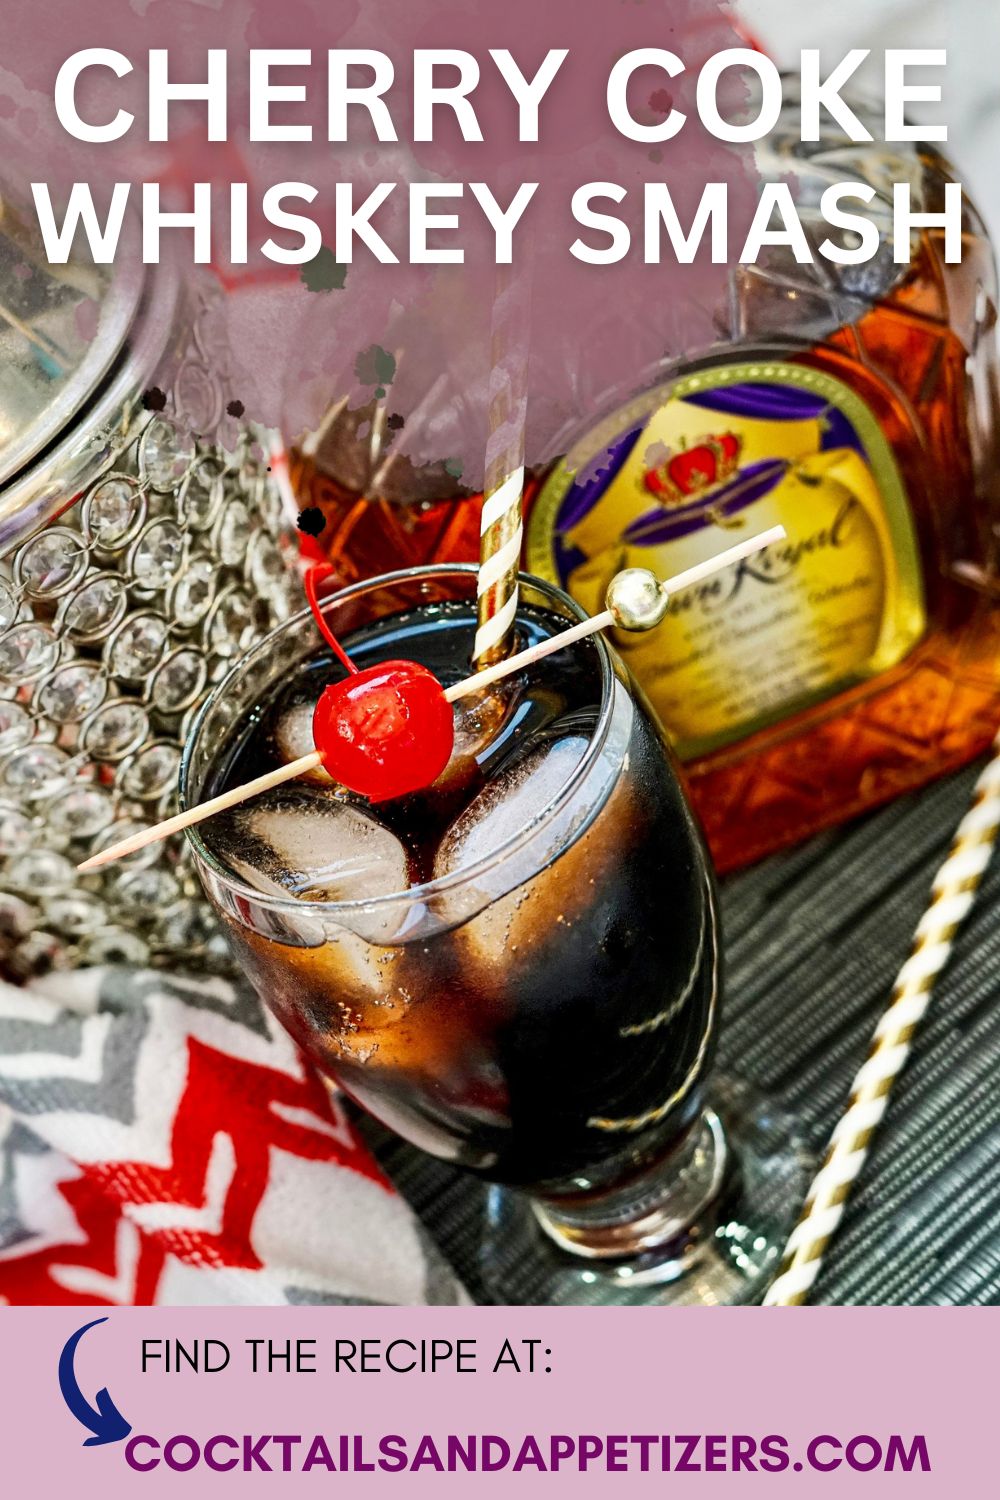 Cherry Coke Whiskey Smash in a glass with cherry garnish.